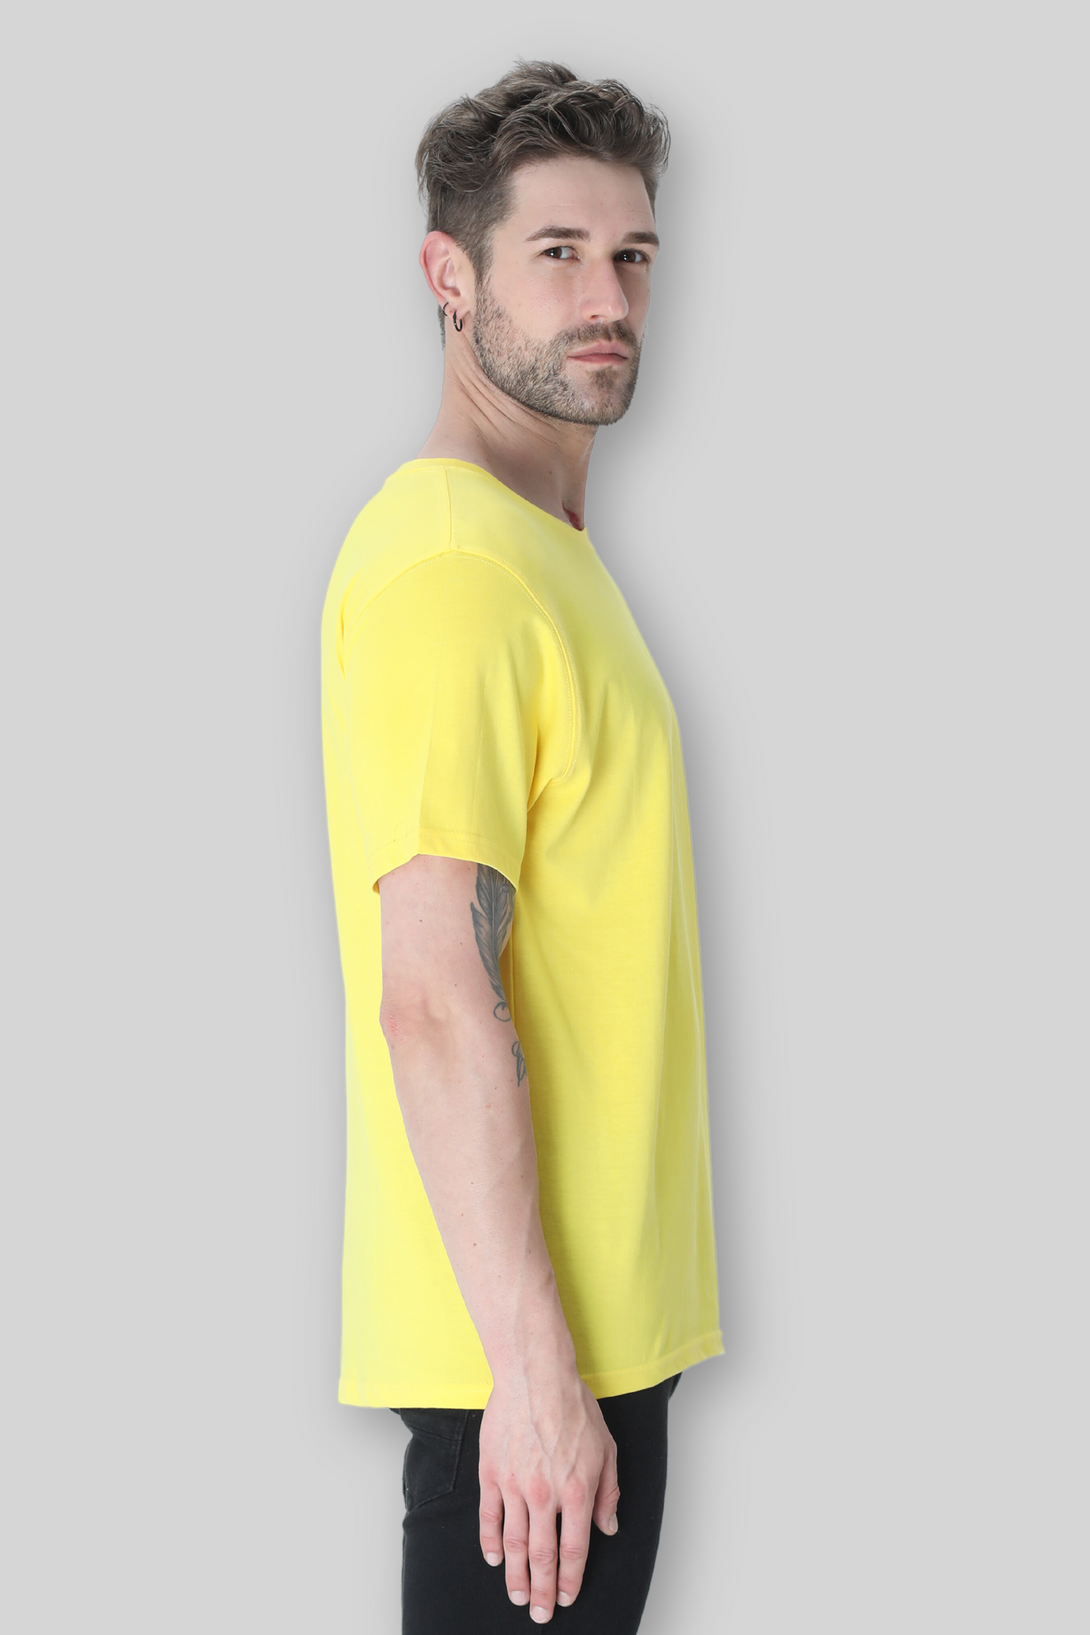 Bright Yellow T-Shirt For Men - WowWaves - 2